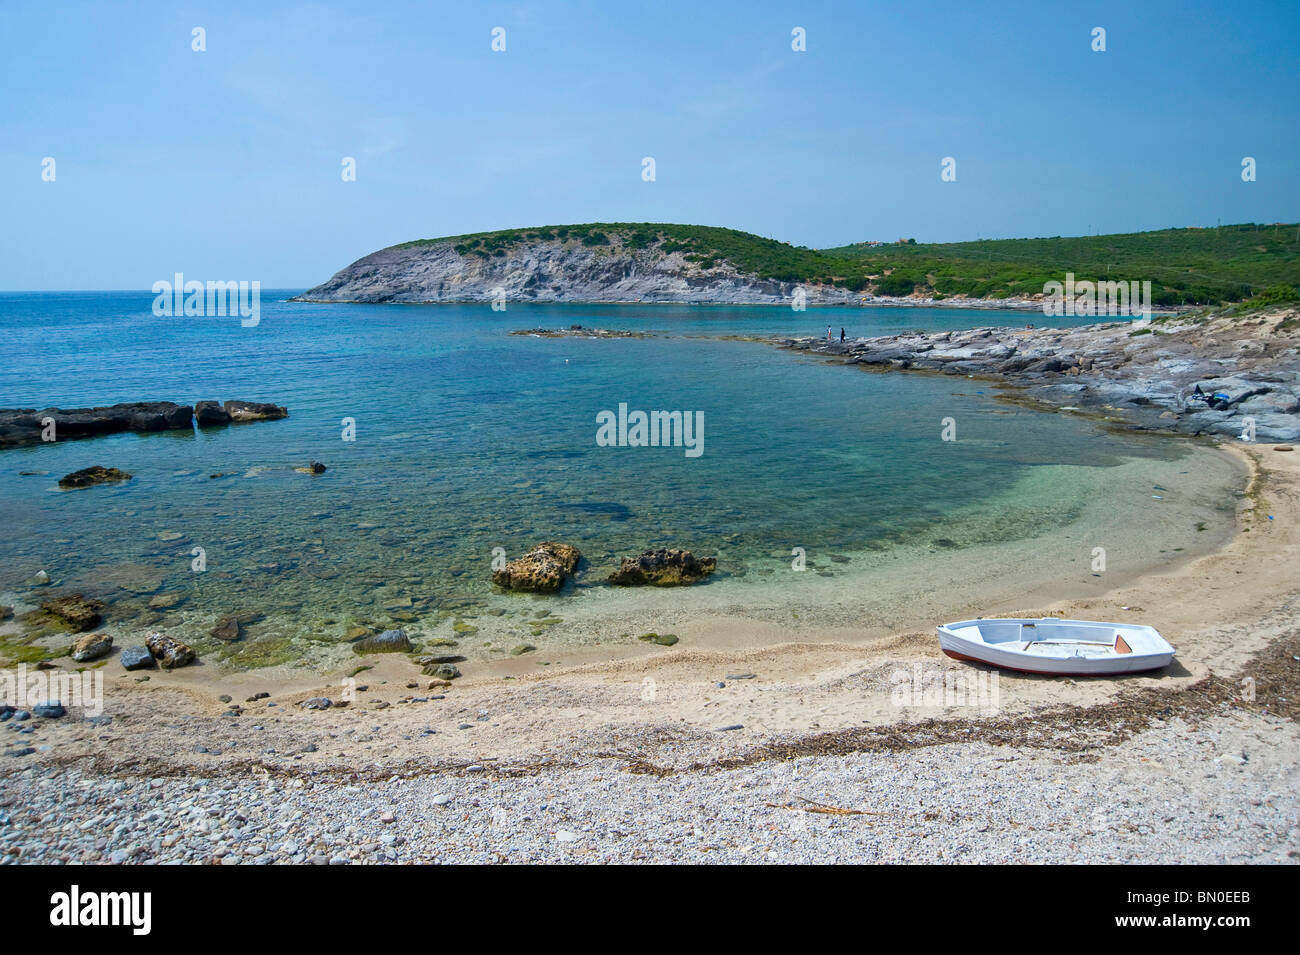 Cala Sapone bay, Sant'Antioco, Sulcis, Iglesiente, Carbonia Iglesias,  Sardinia, Italy, Europe Stock Photo - Alamy